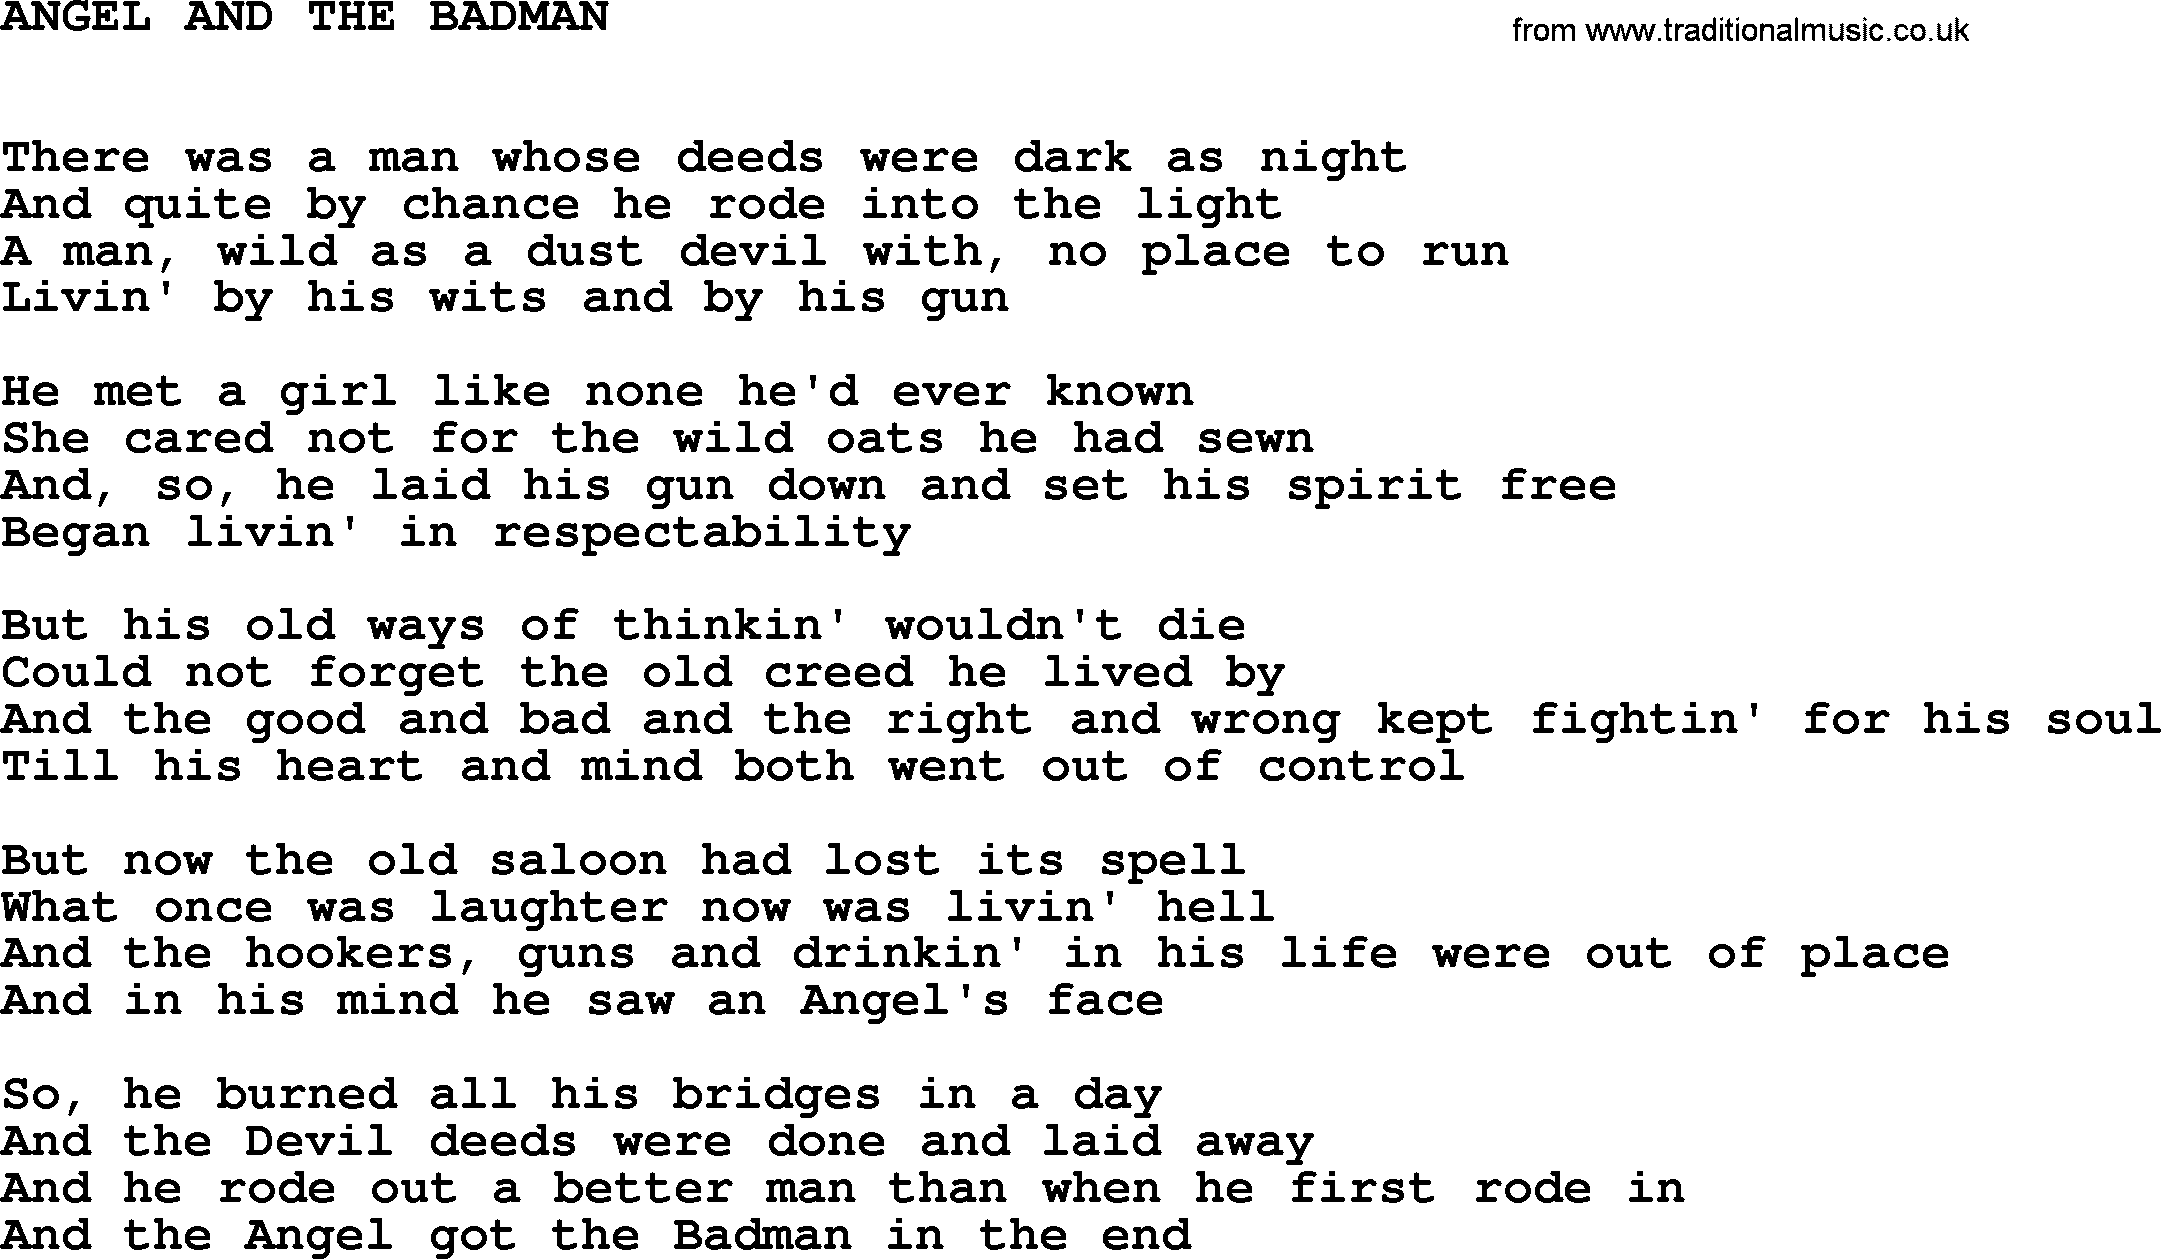 Johnny Cash song Angel And The Badman.txt lyrics